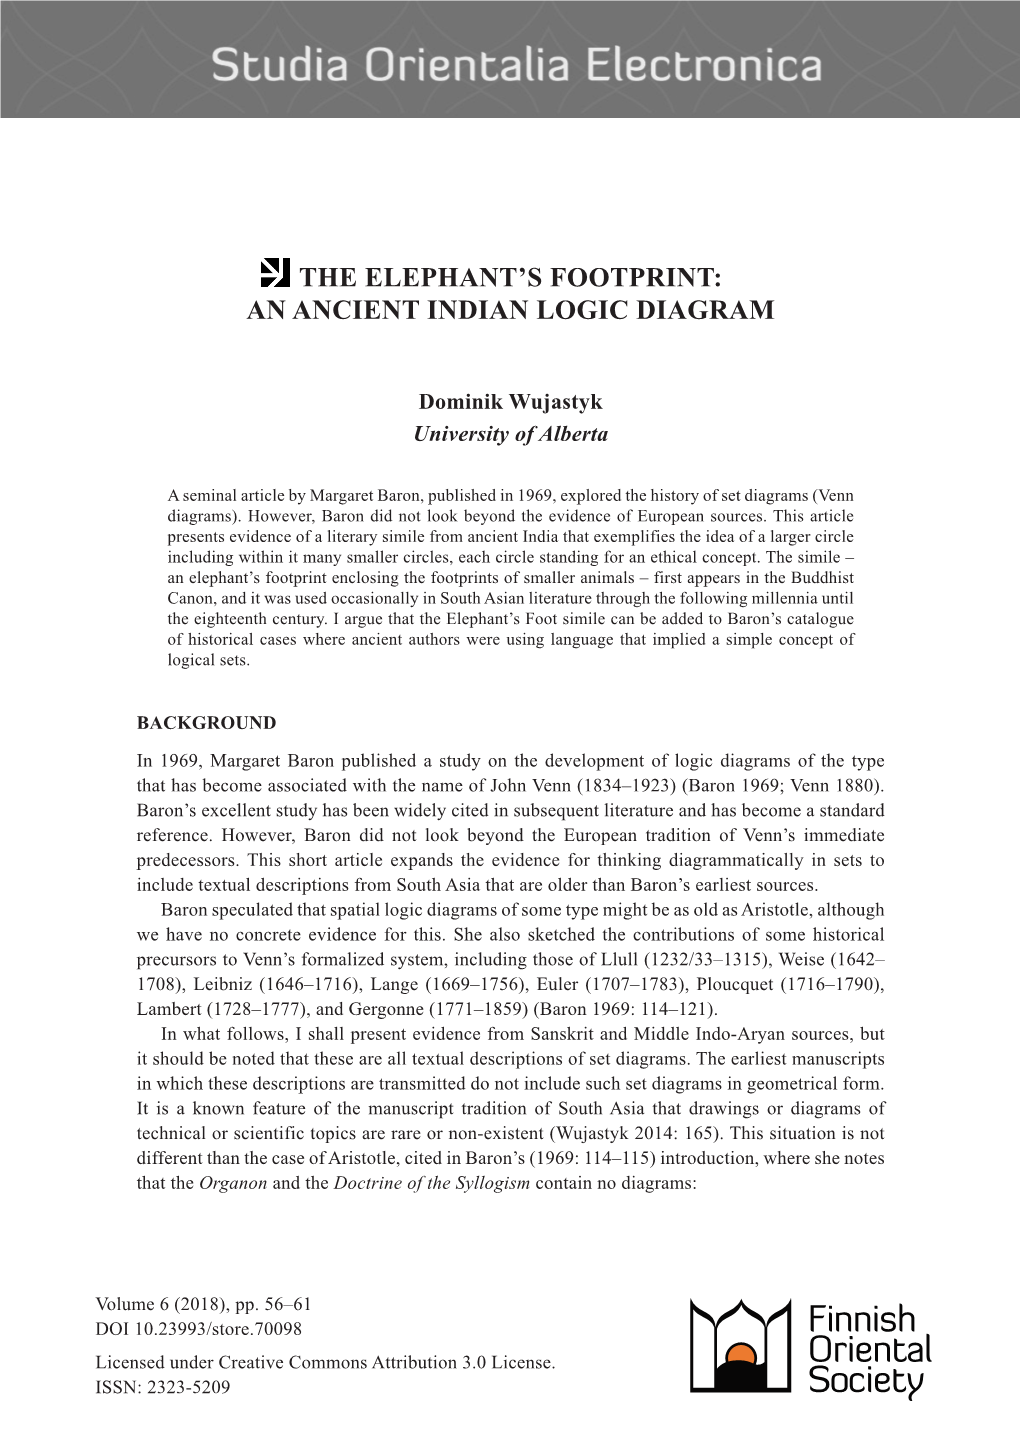 The Elephant's Footprint: an Ancient Indian Logic Diagram